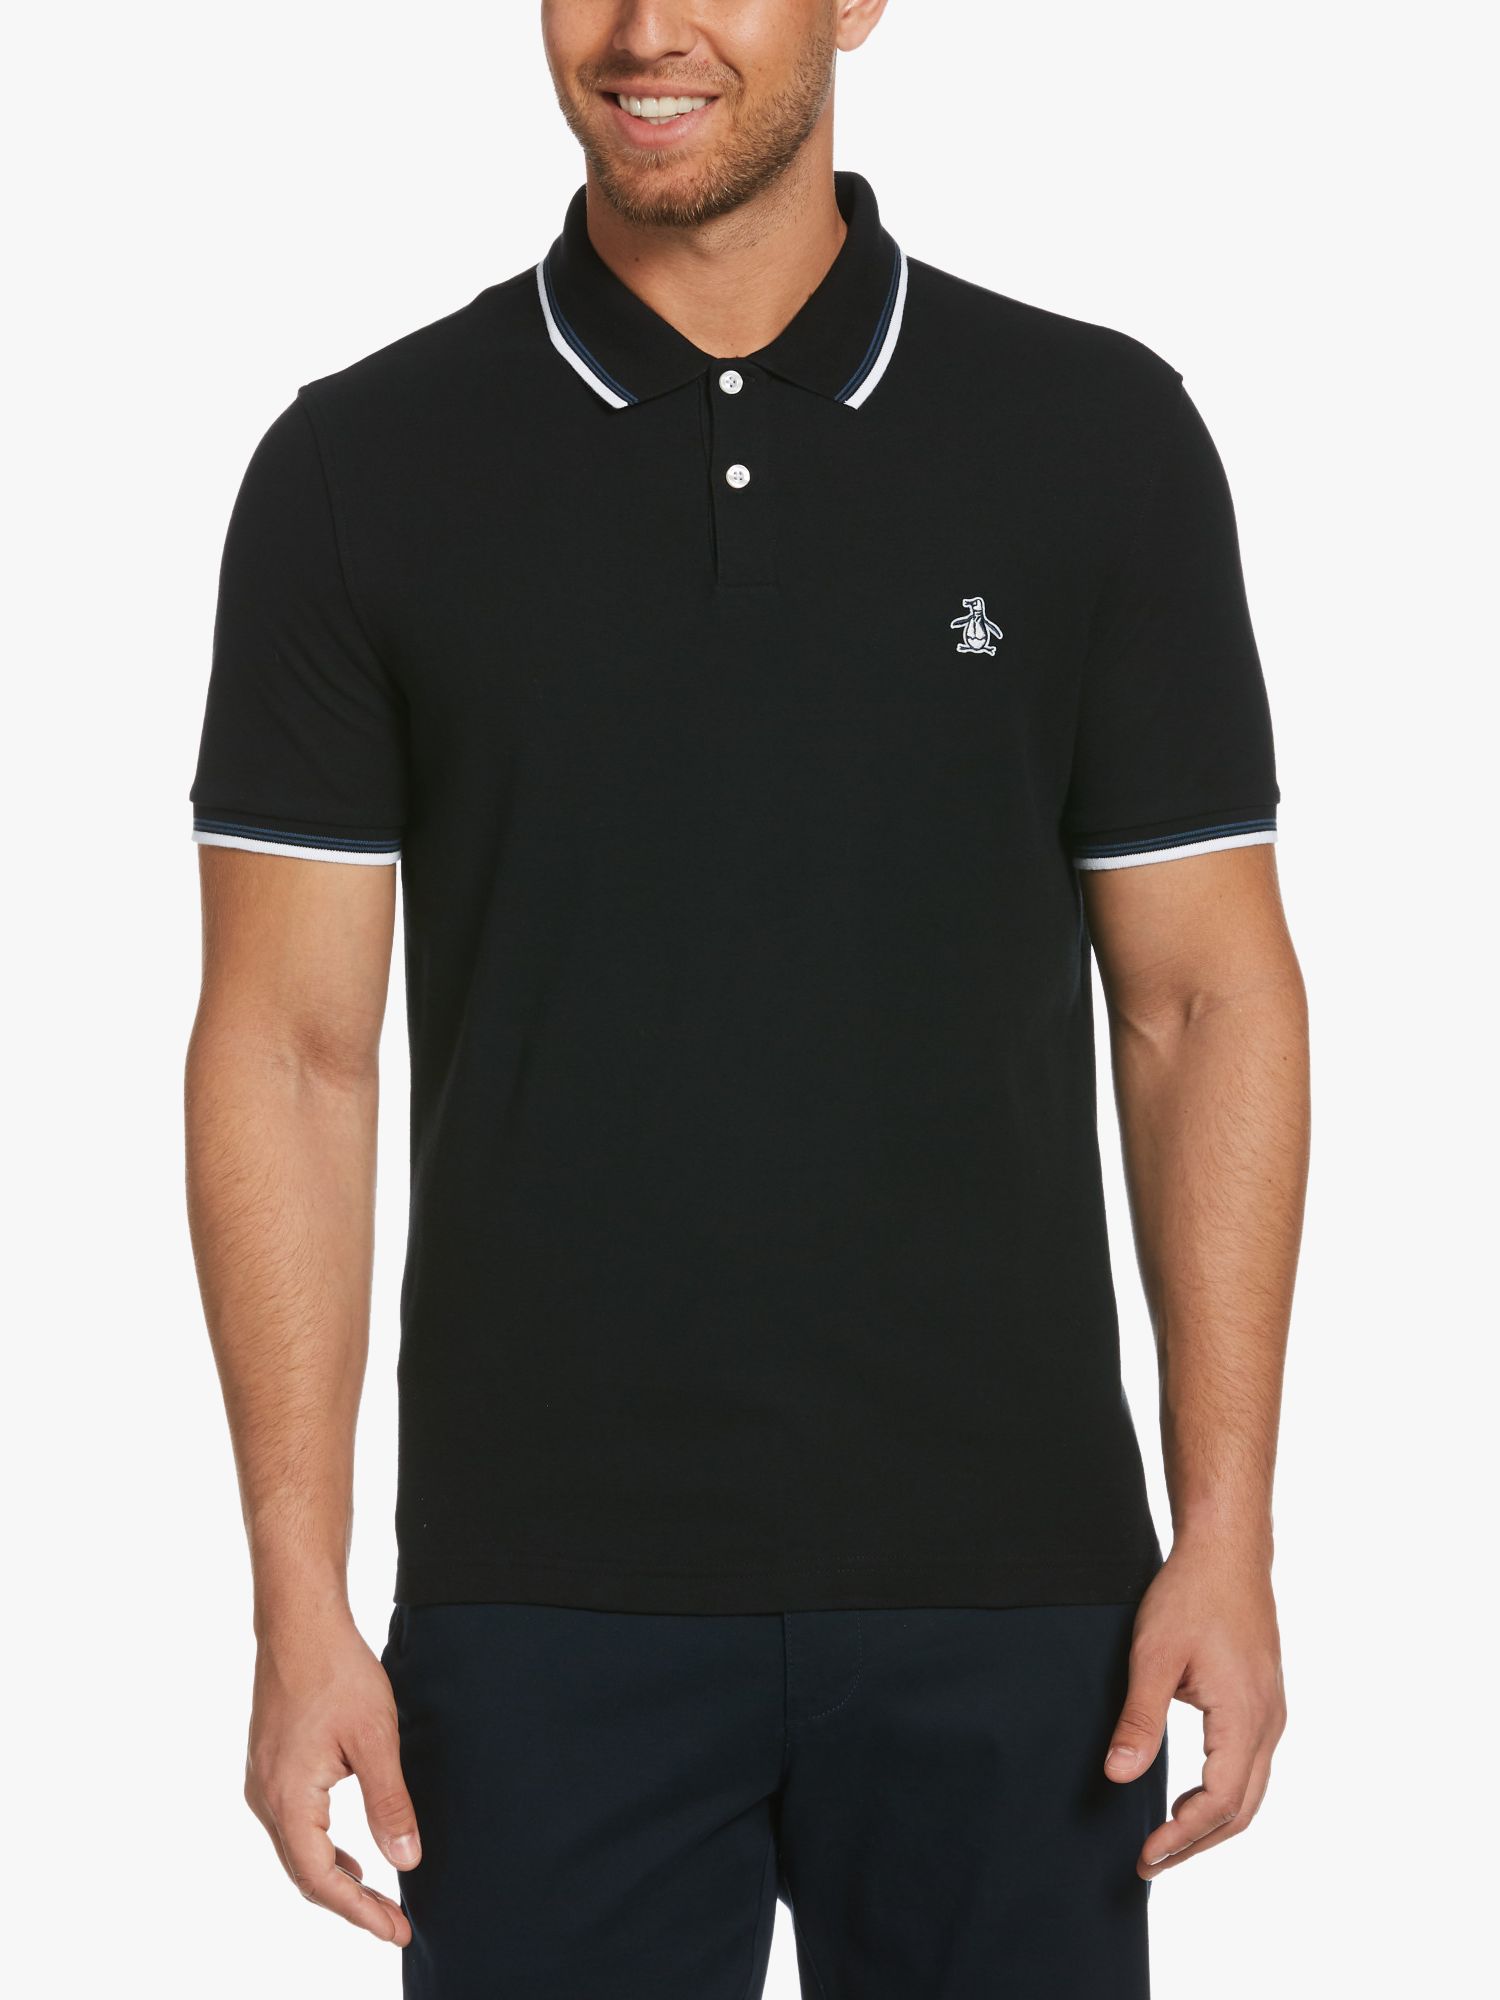 Original Penguin Synthetic Womens Sleeveless Veronica Golf Polo Shirt In Black Iris for Men Women Mens Clothing Mens T-shirts Polo shirts 